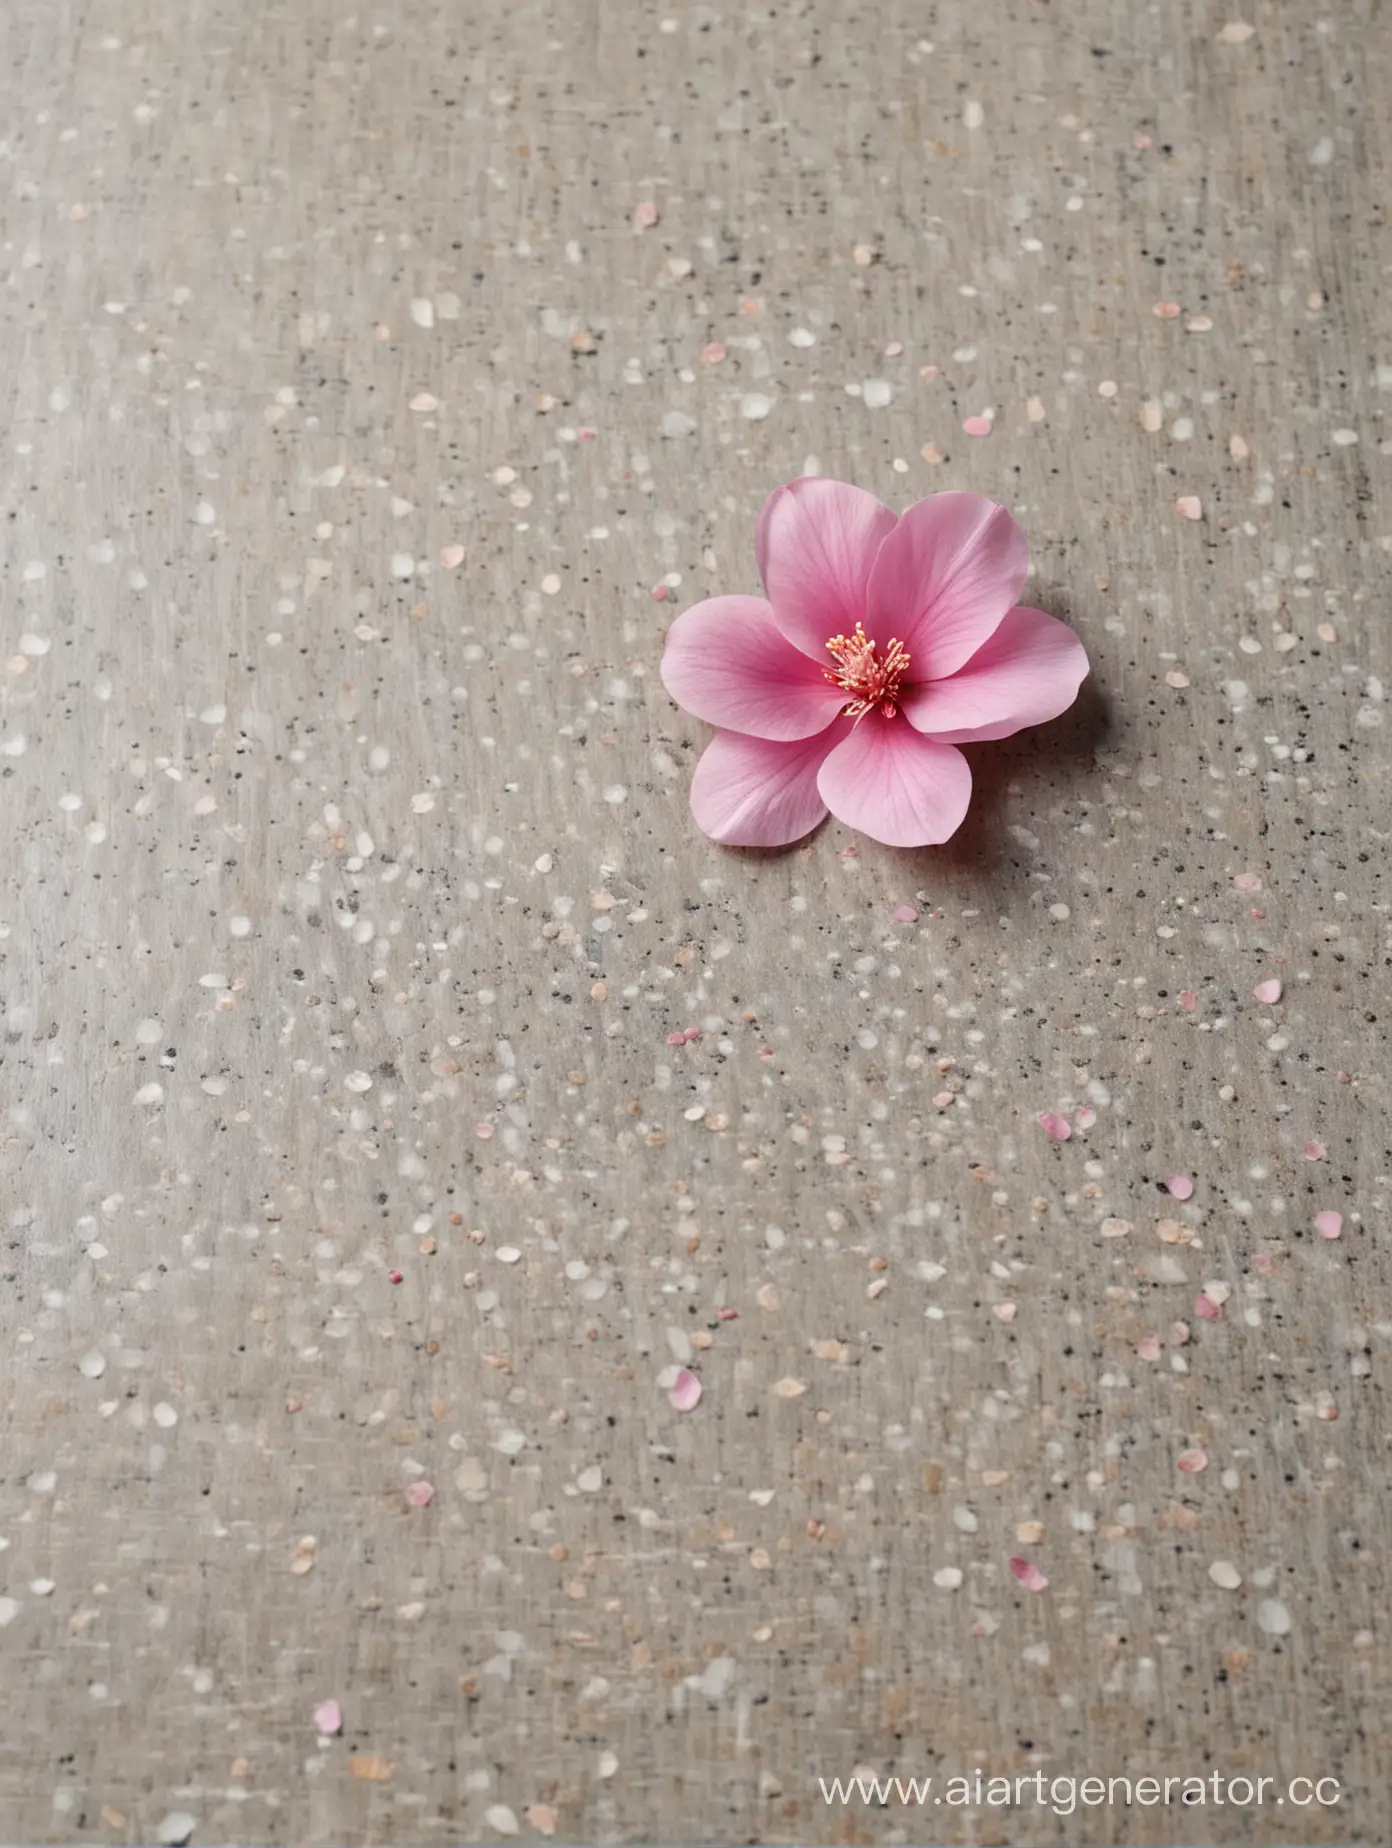 Fresh-Pink-Petals-on-Textured-Stone-Table-Minimalist-Floral-Arrangement-with-Center-Focus